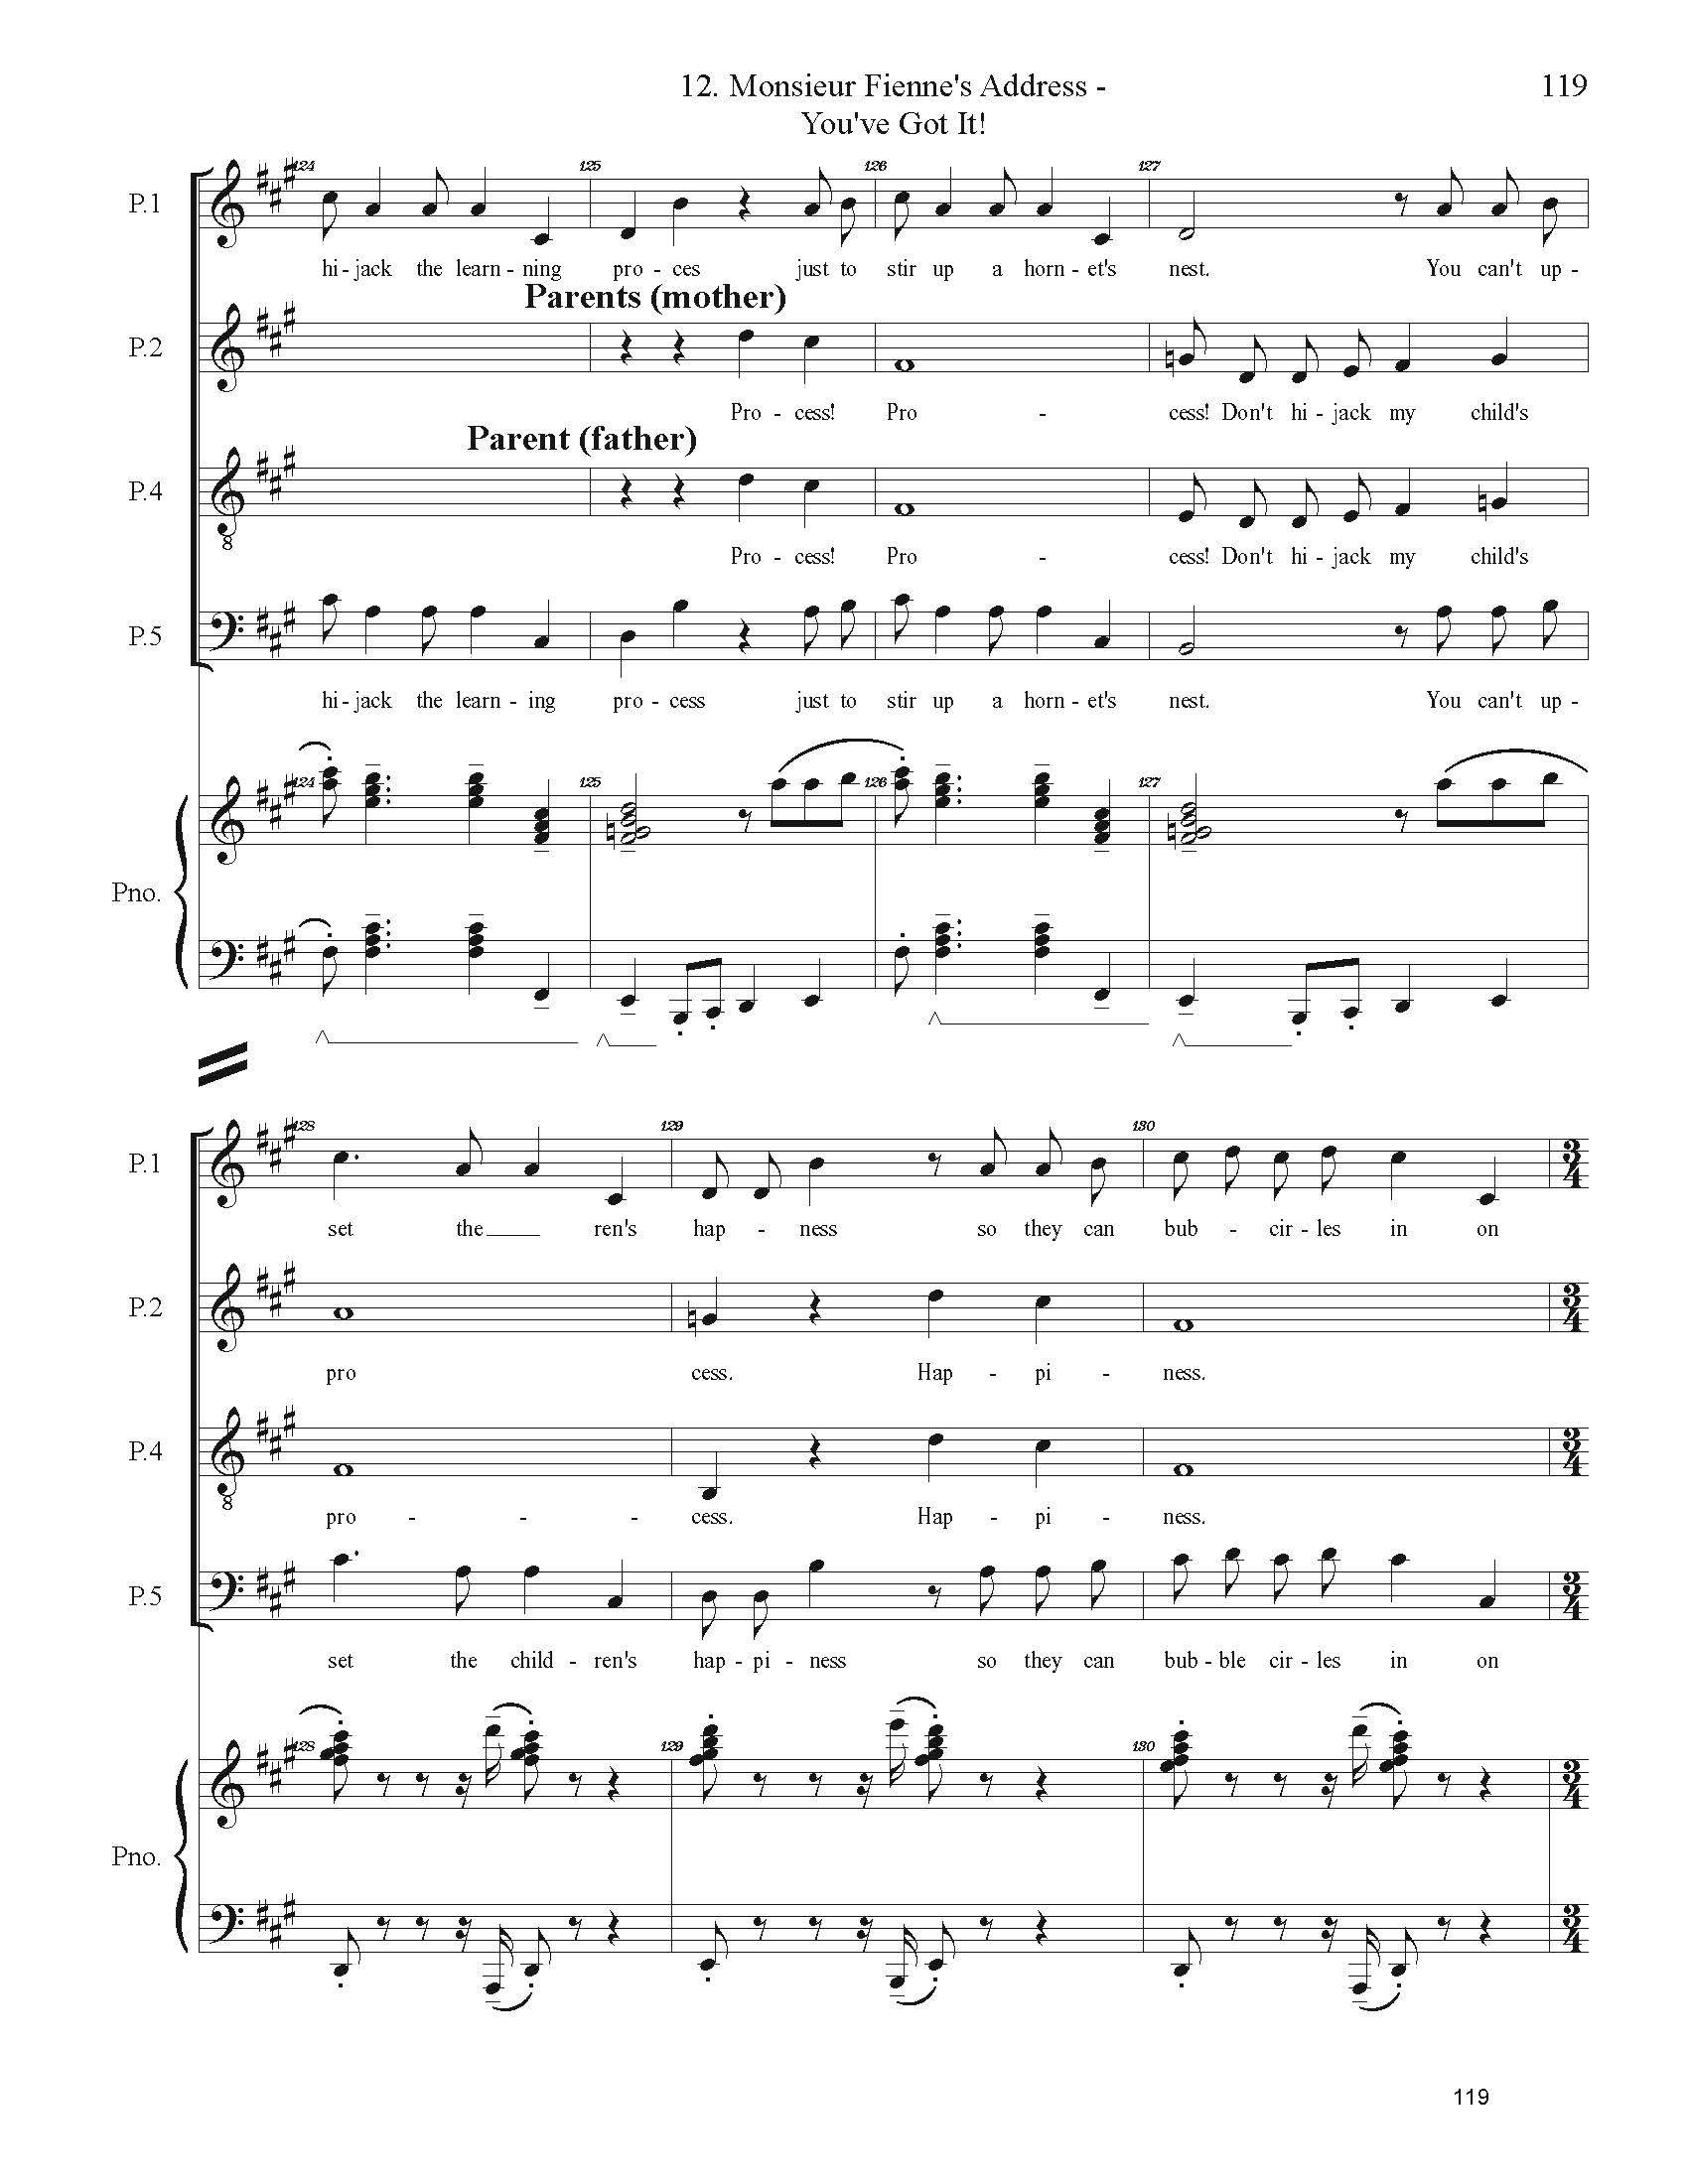 FULL PIANO VOCAL SCORE DRAFT 1 - Score_Page_119.jpg